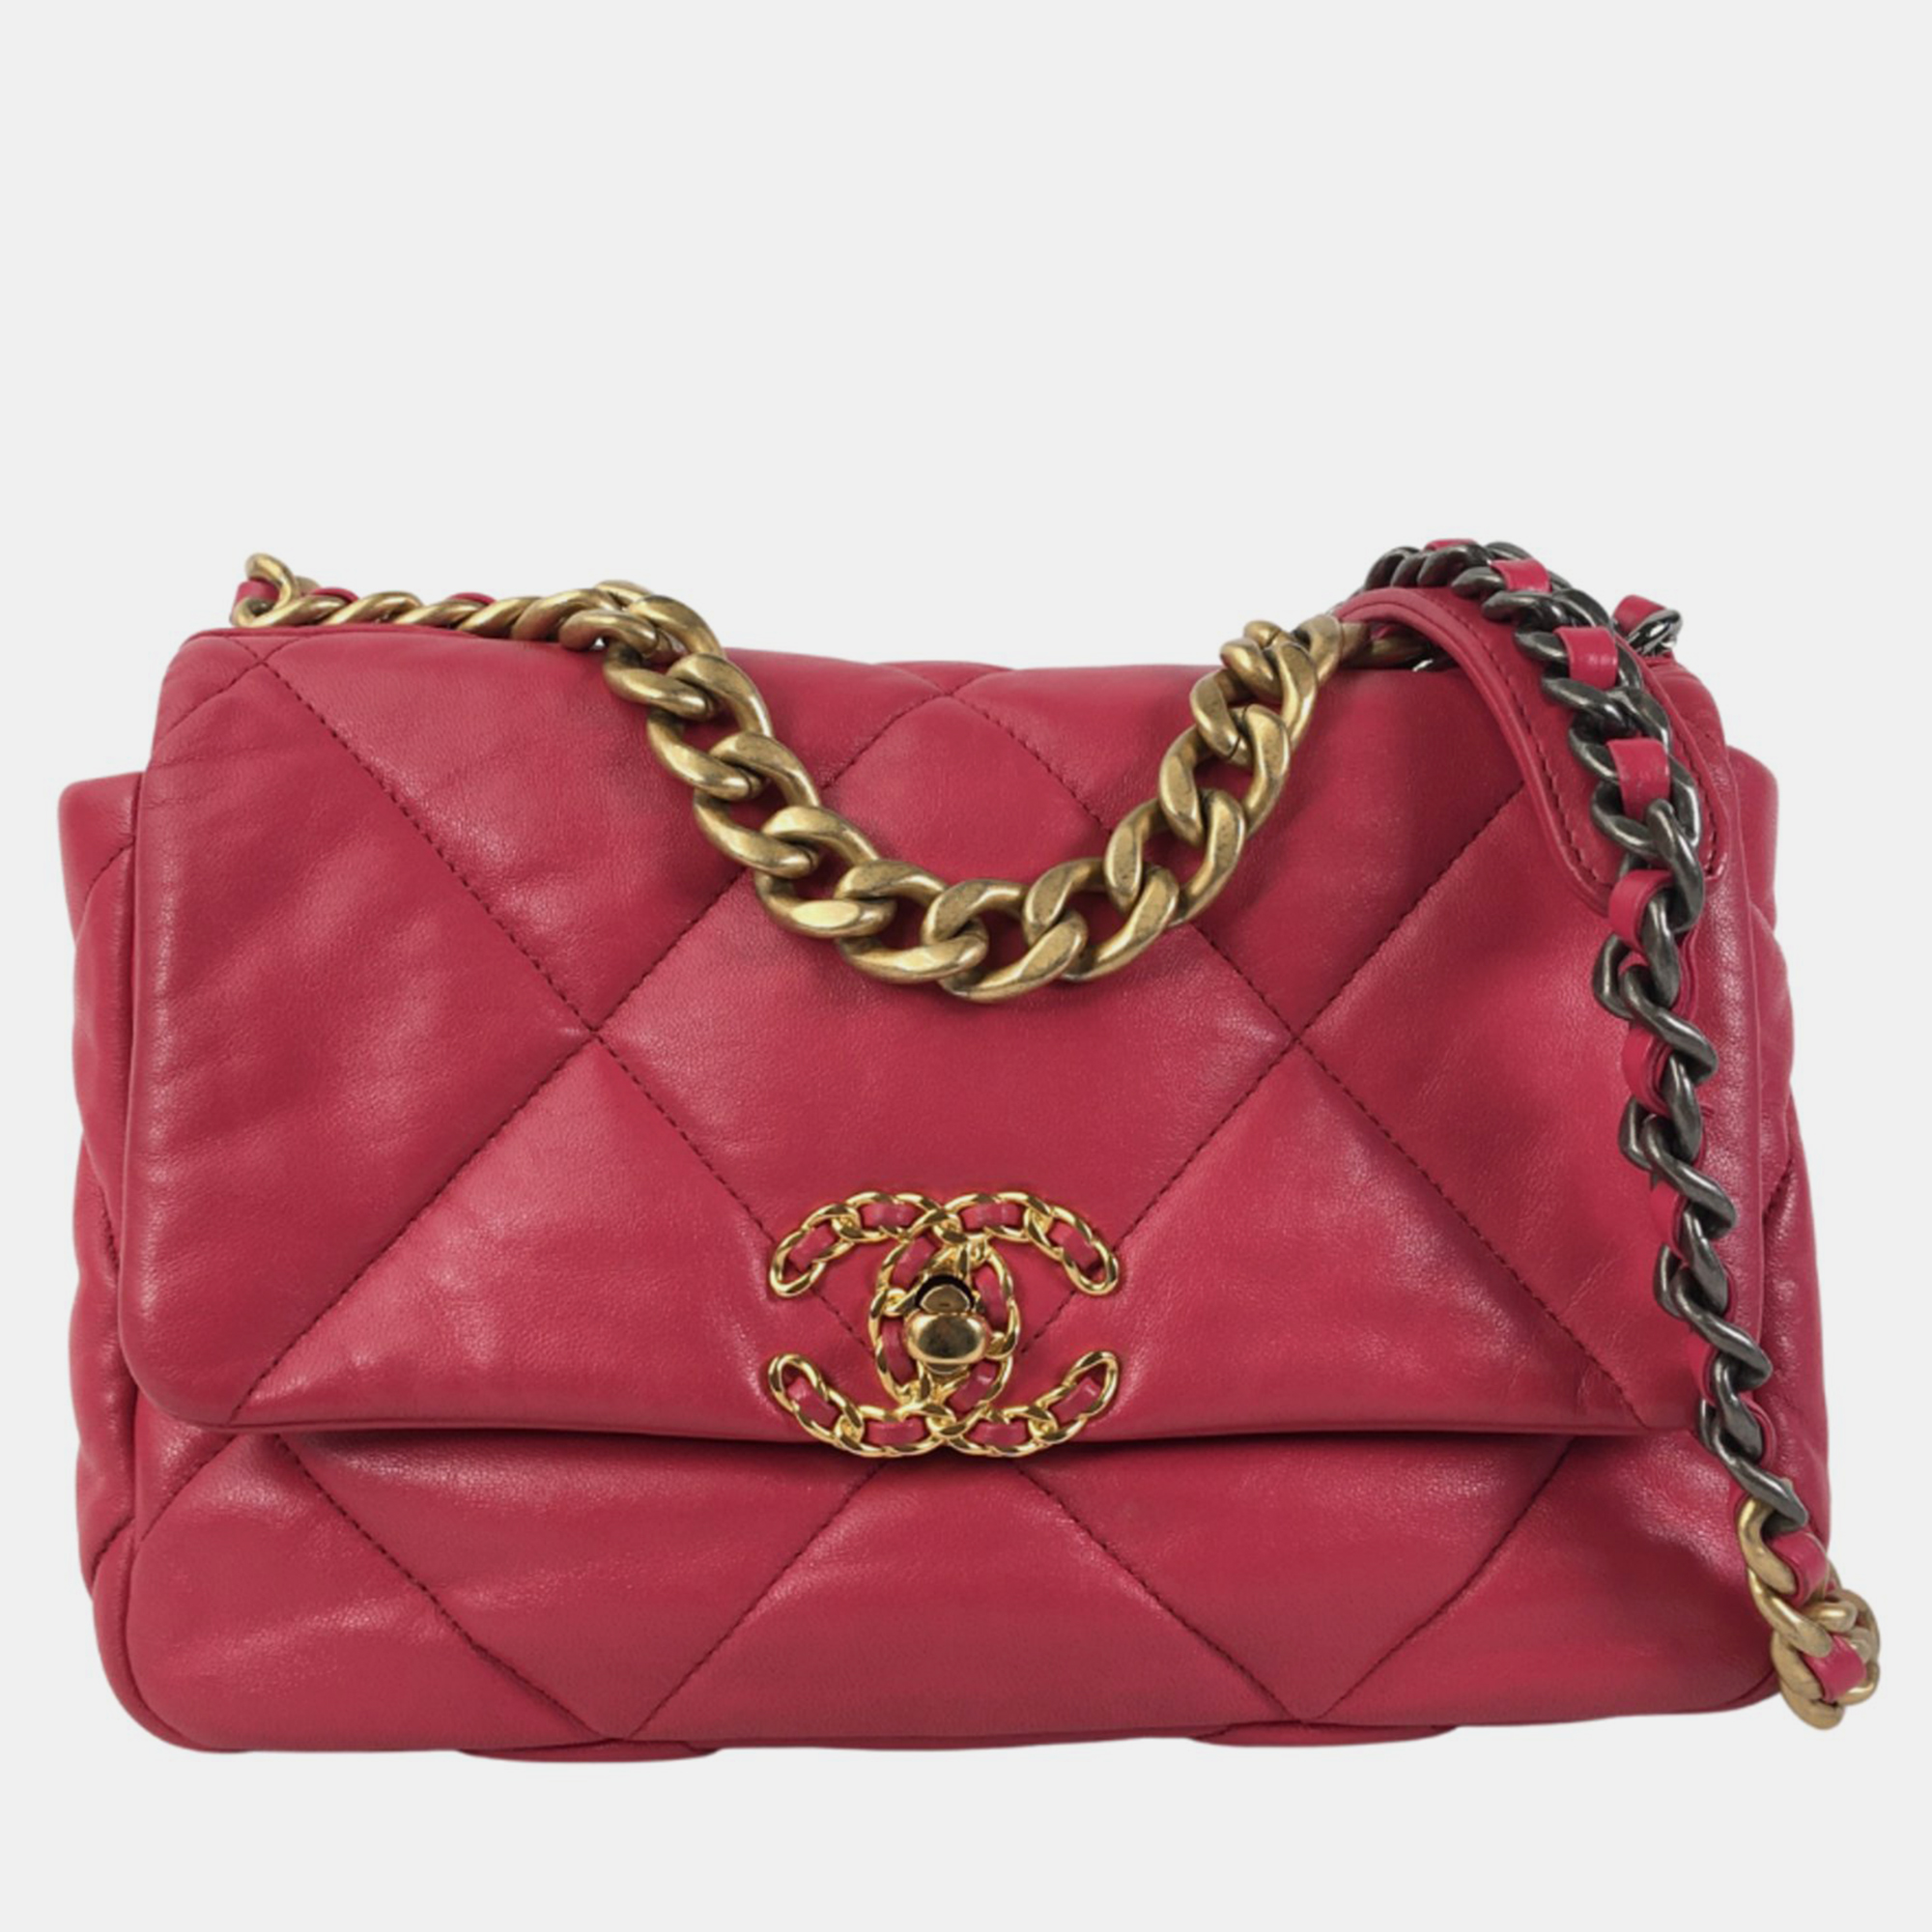 Chanel pink leather small 19 shoulder bag